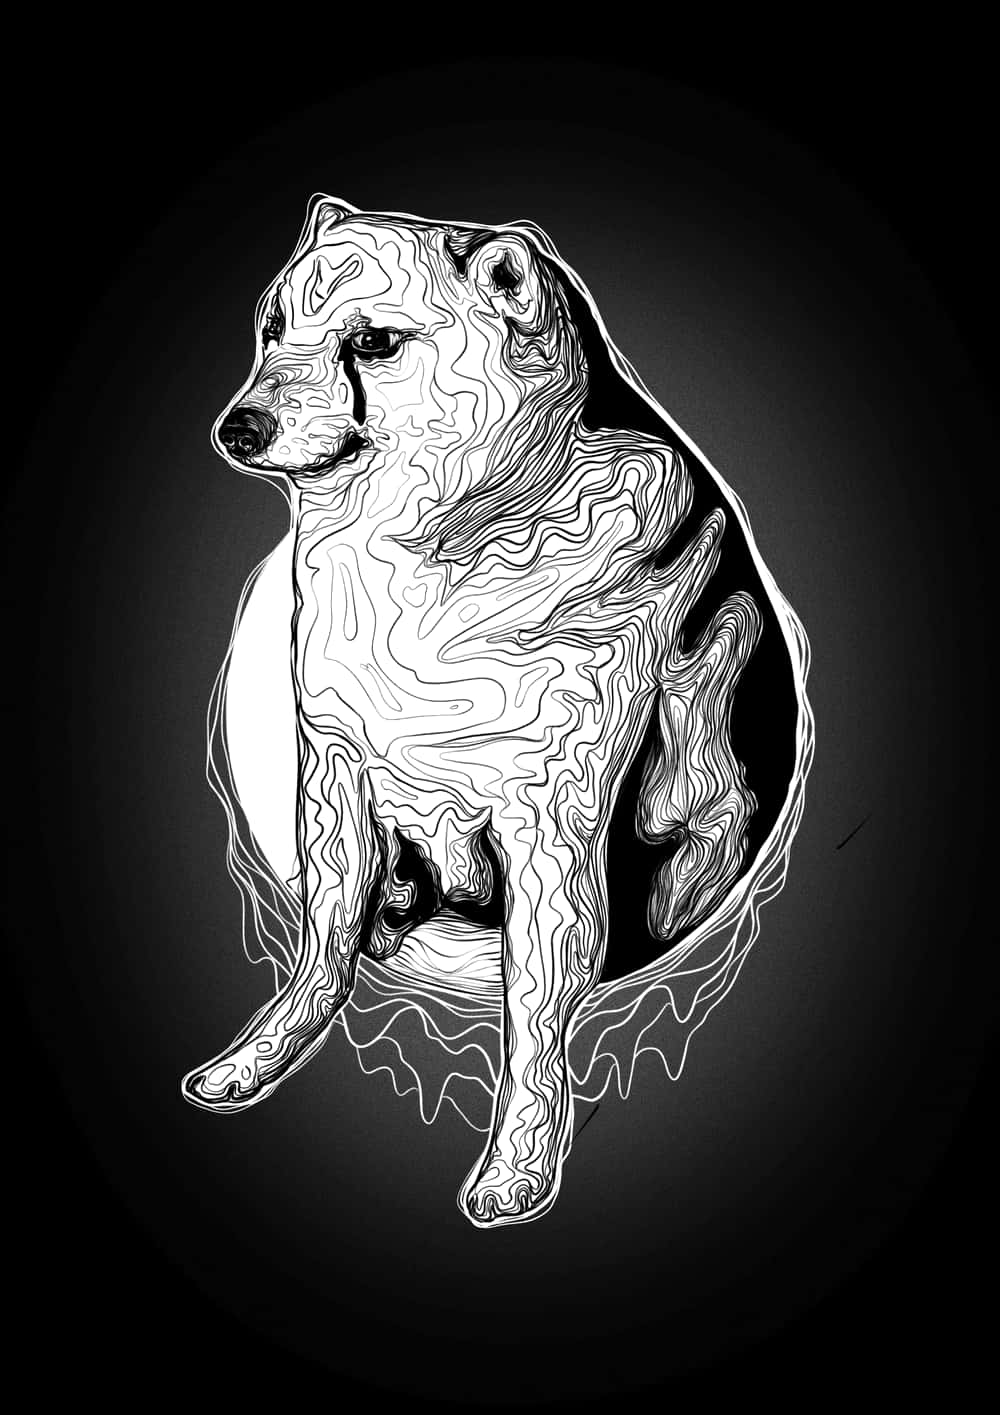 Ensvartvit Teckning Av En Hund Som Sitter På En Svart Bakgrund Wallpaper